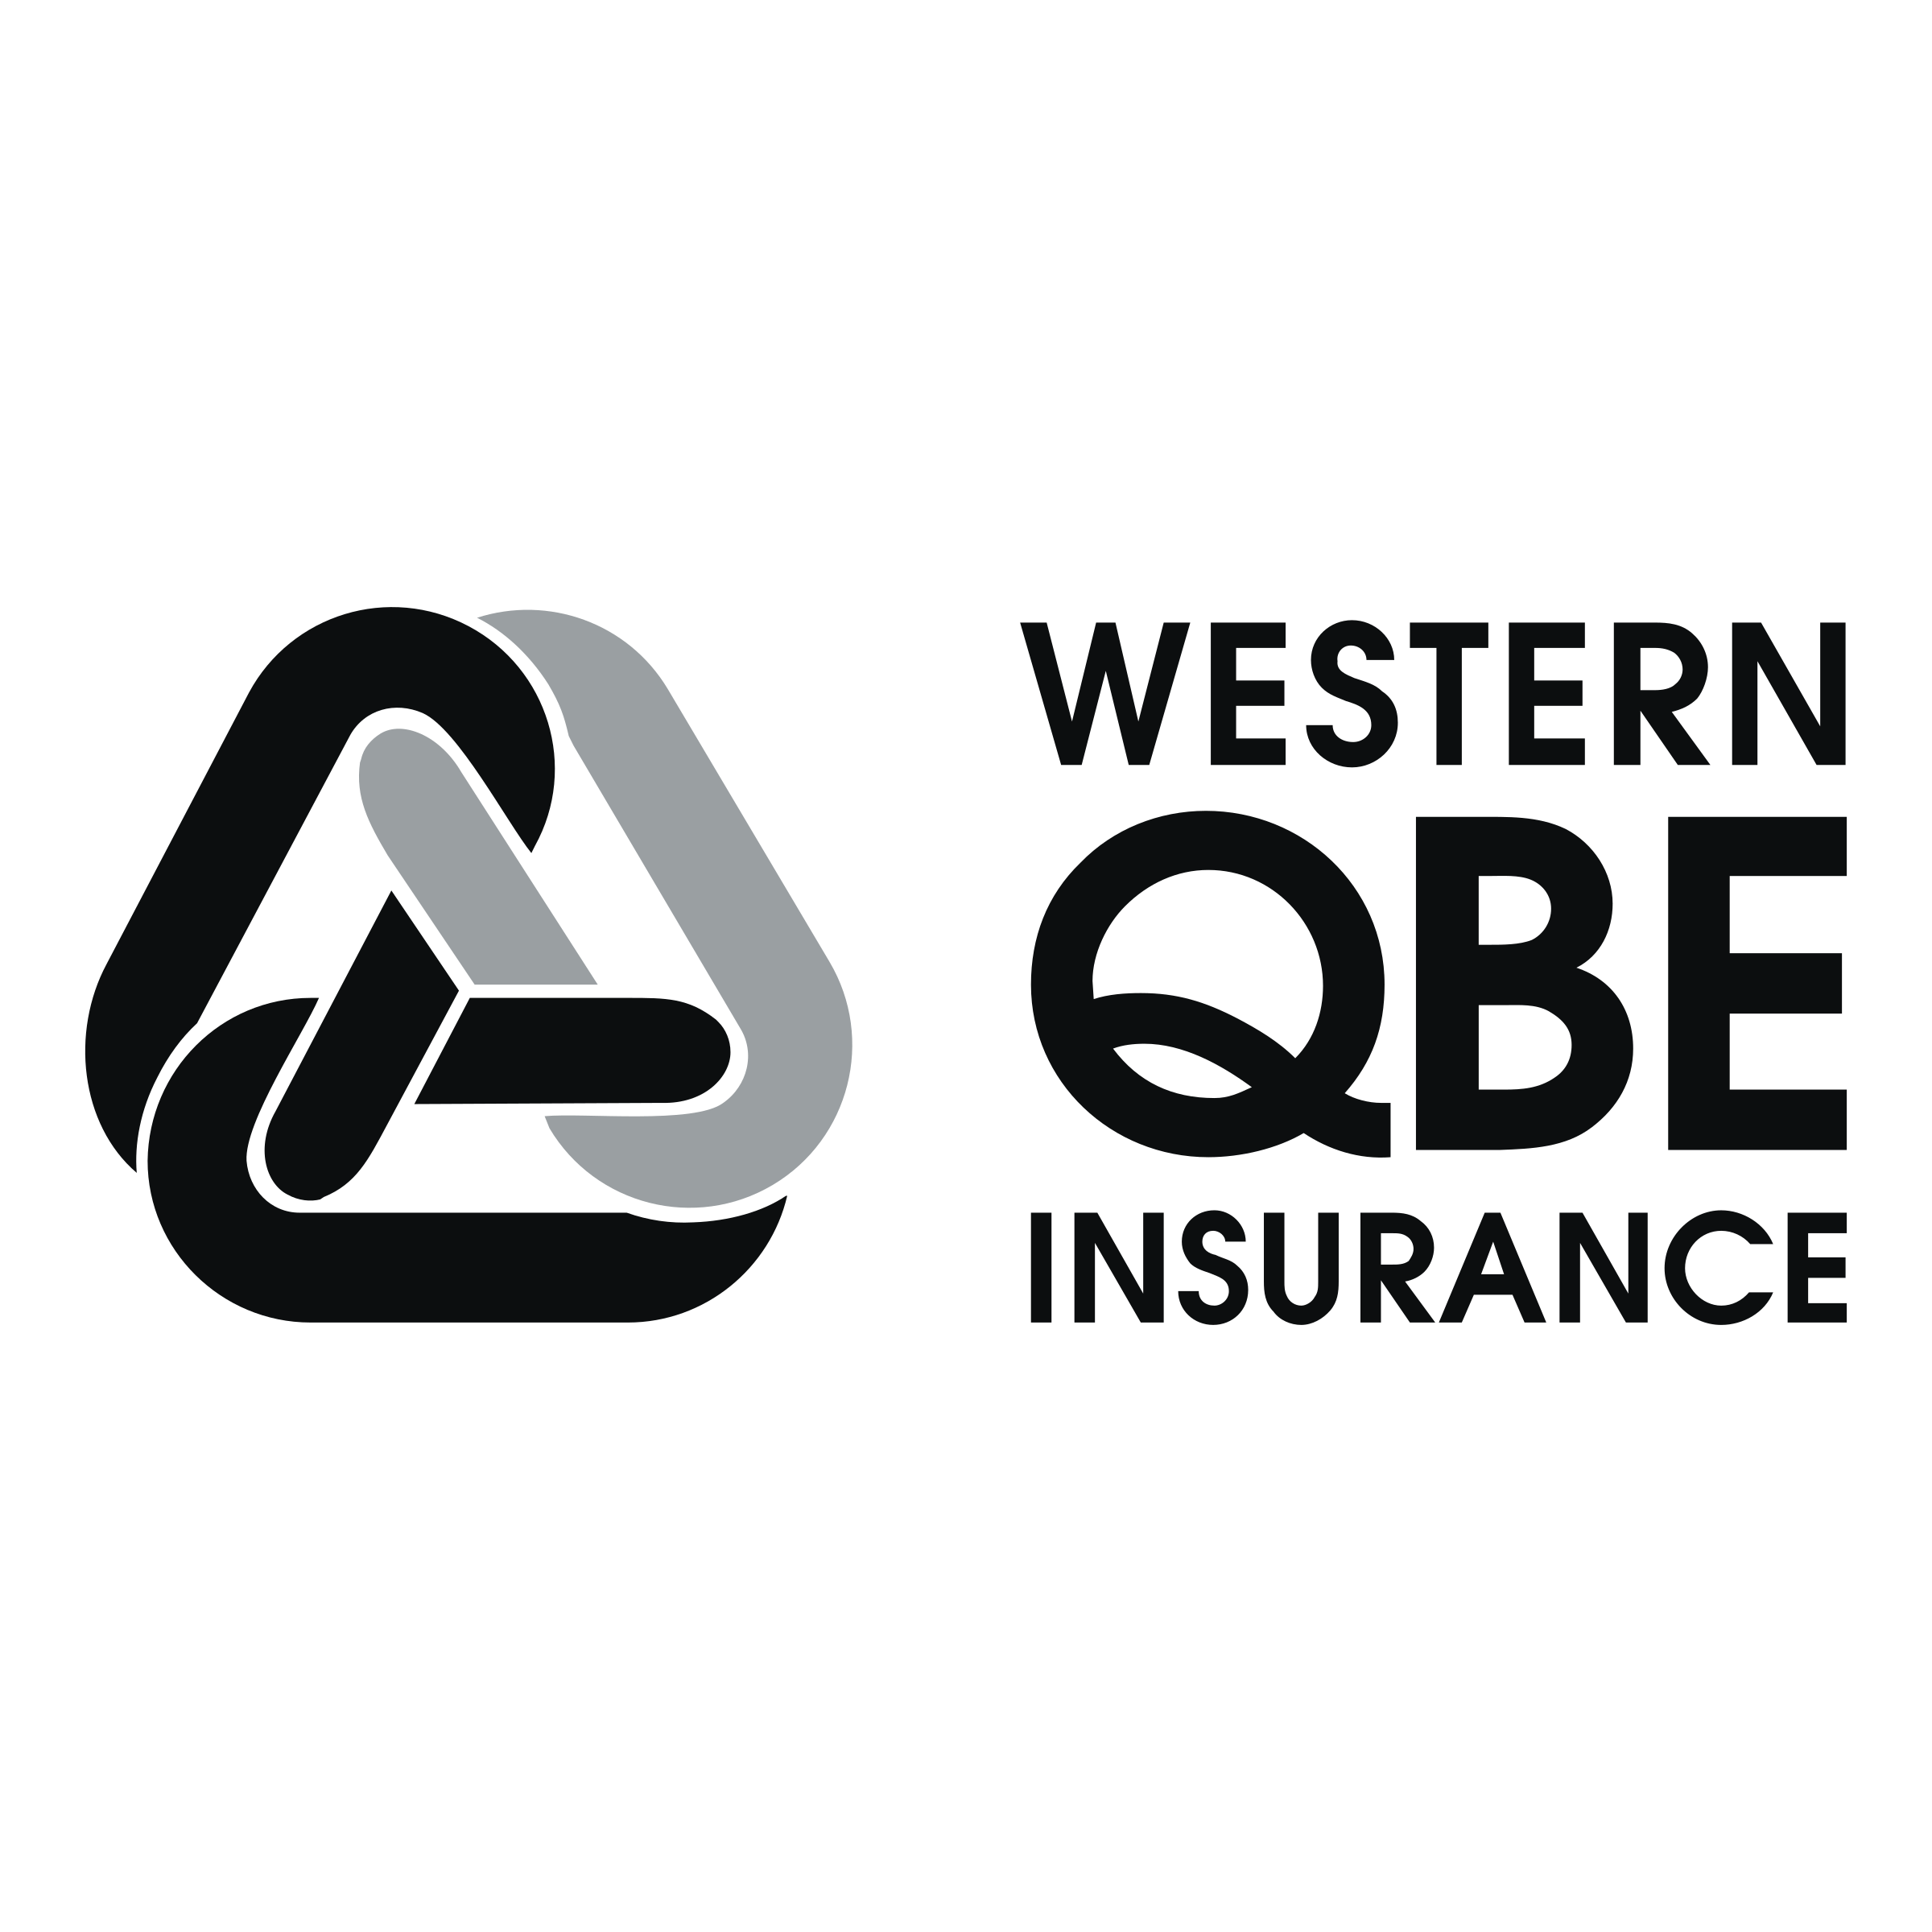 QBE Logo - Western QBE Insurance Logo PNG Transparent & SVG Vector - Freebie Supply